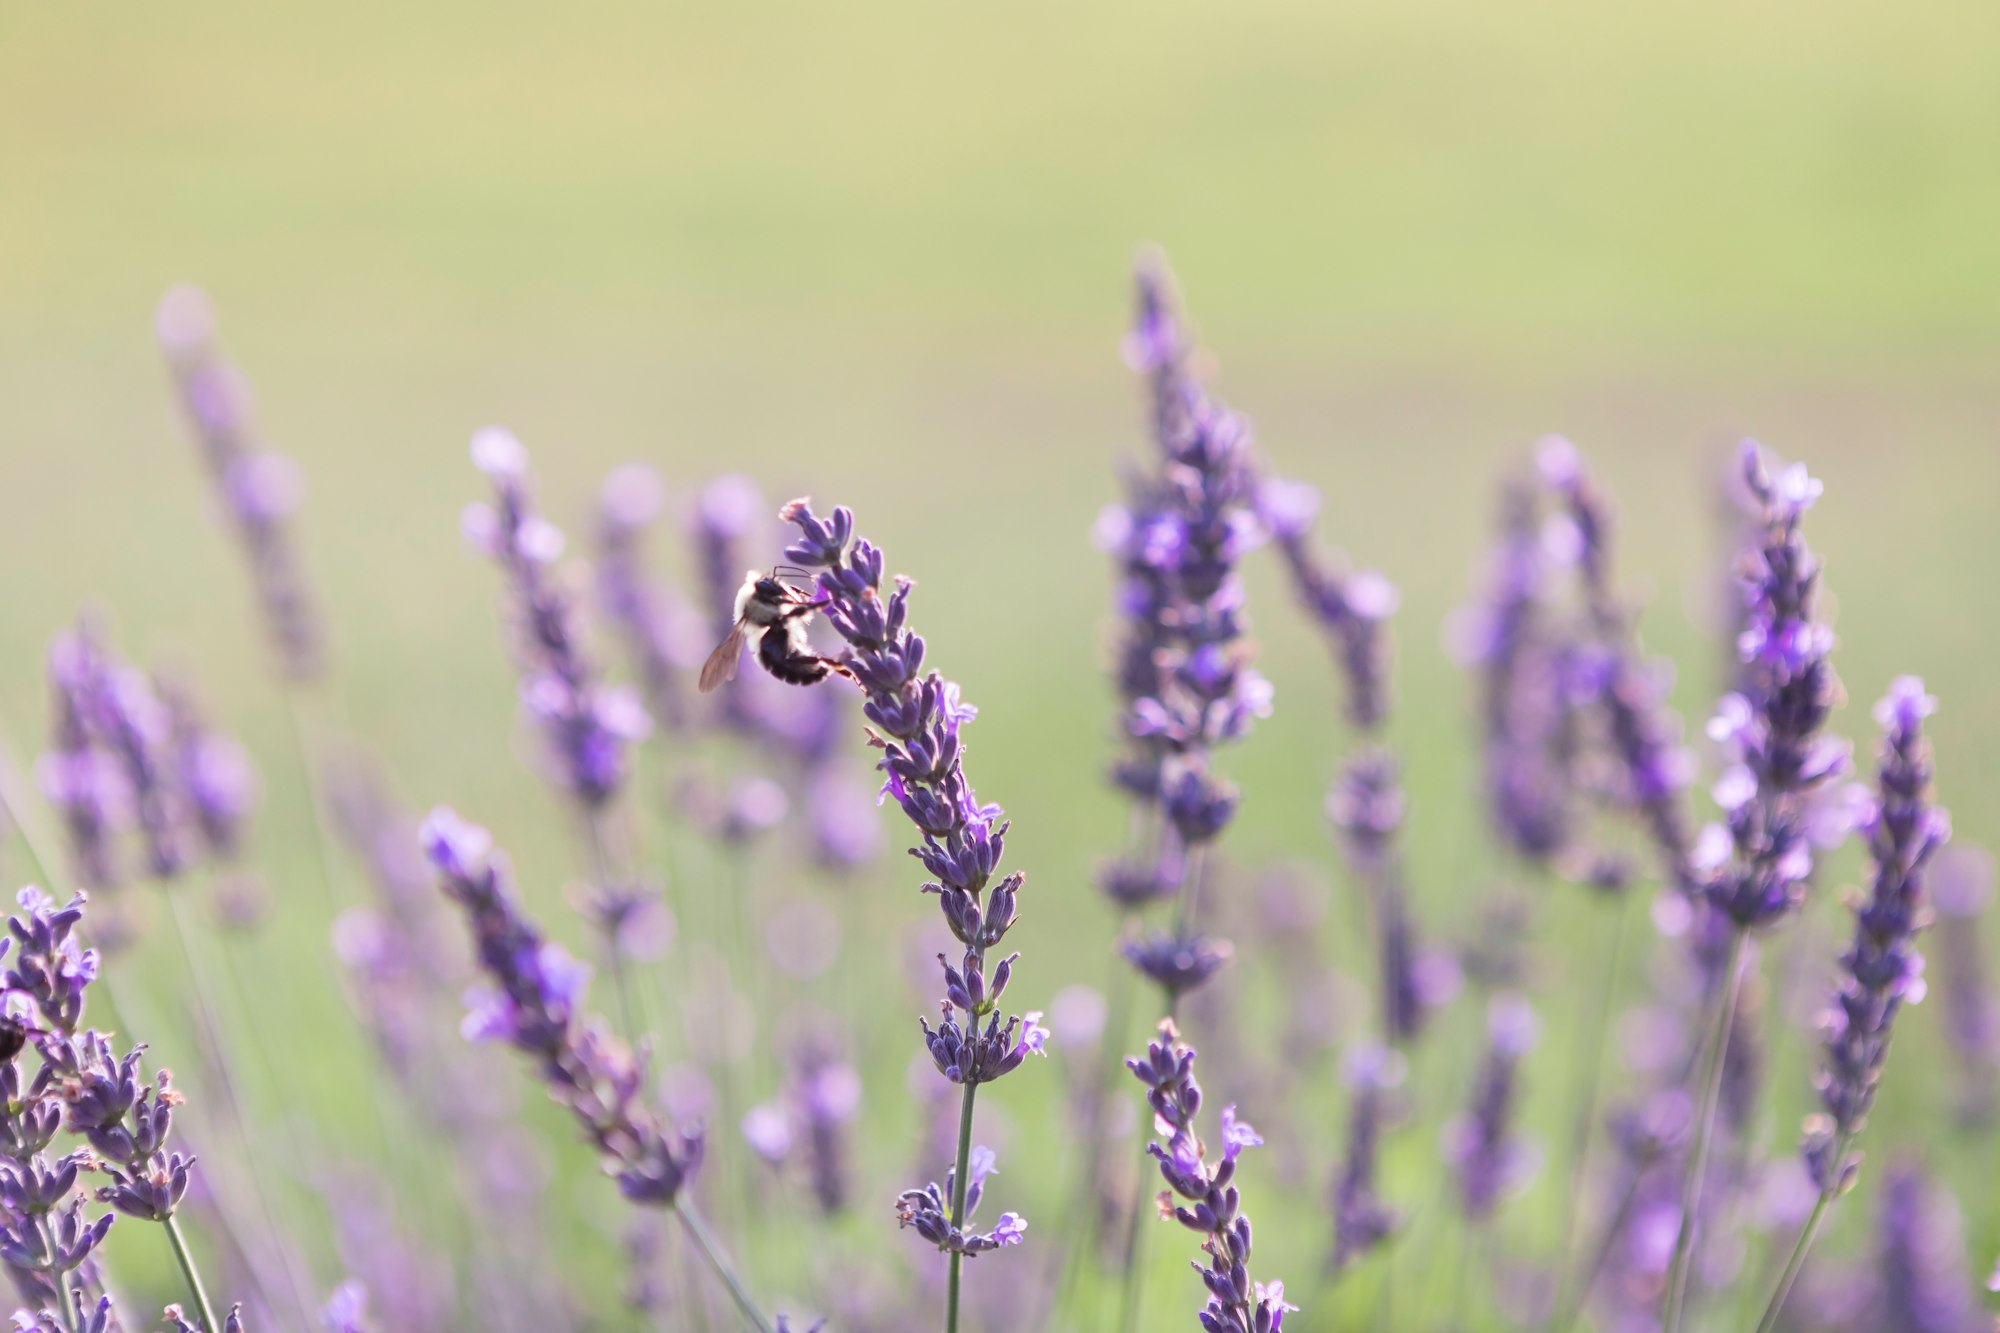 A honey bee pollinating a purple lavender flower | Check out my blog: matthewtrader.com/unsplash